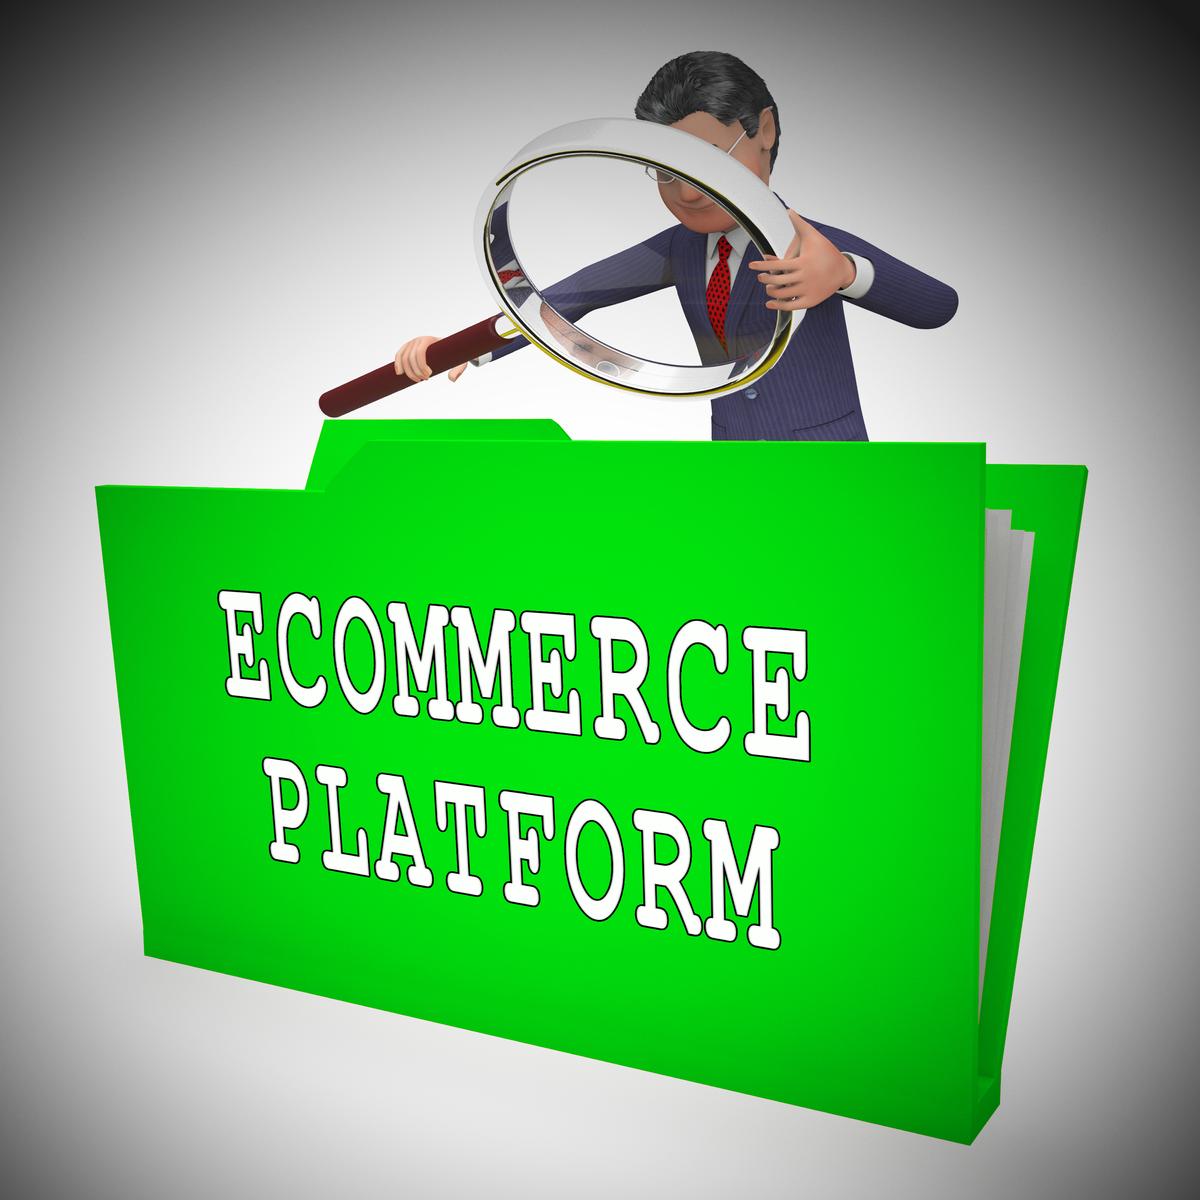 Best e-commerce platform